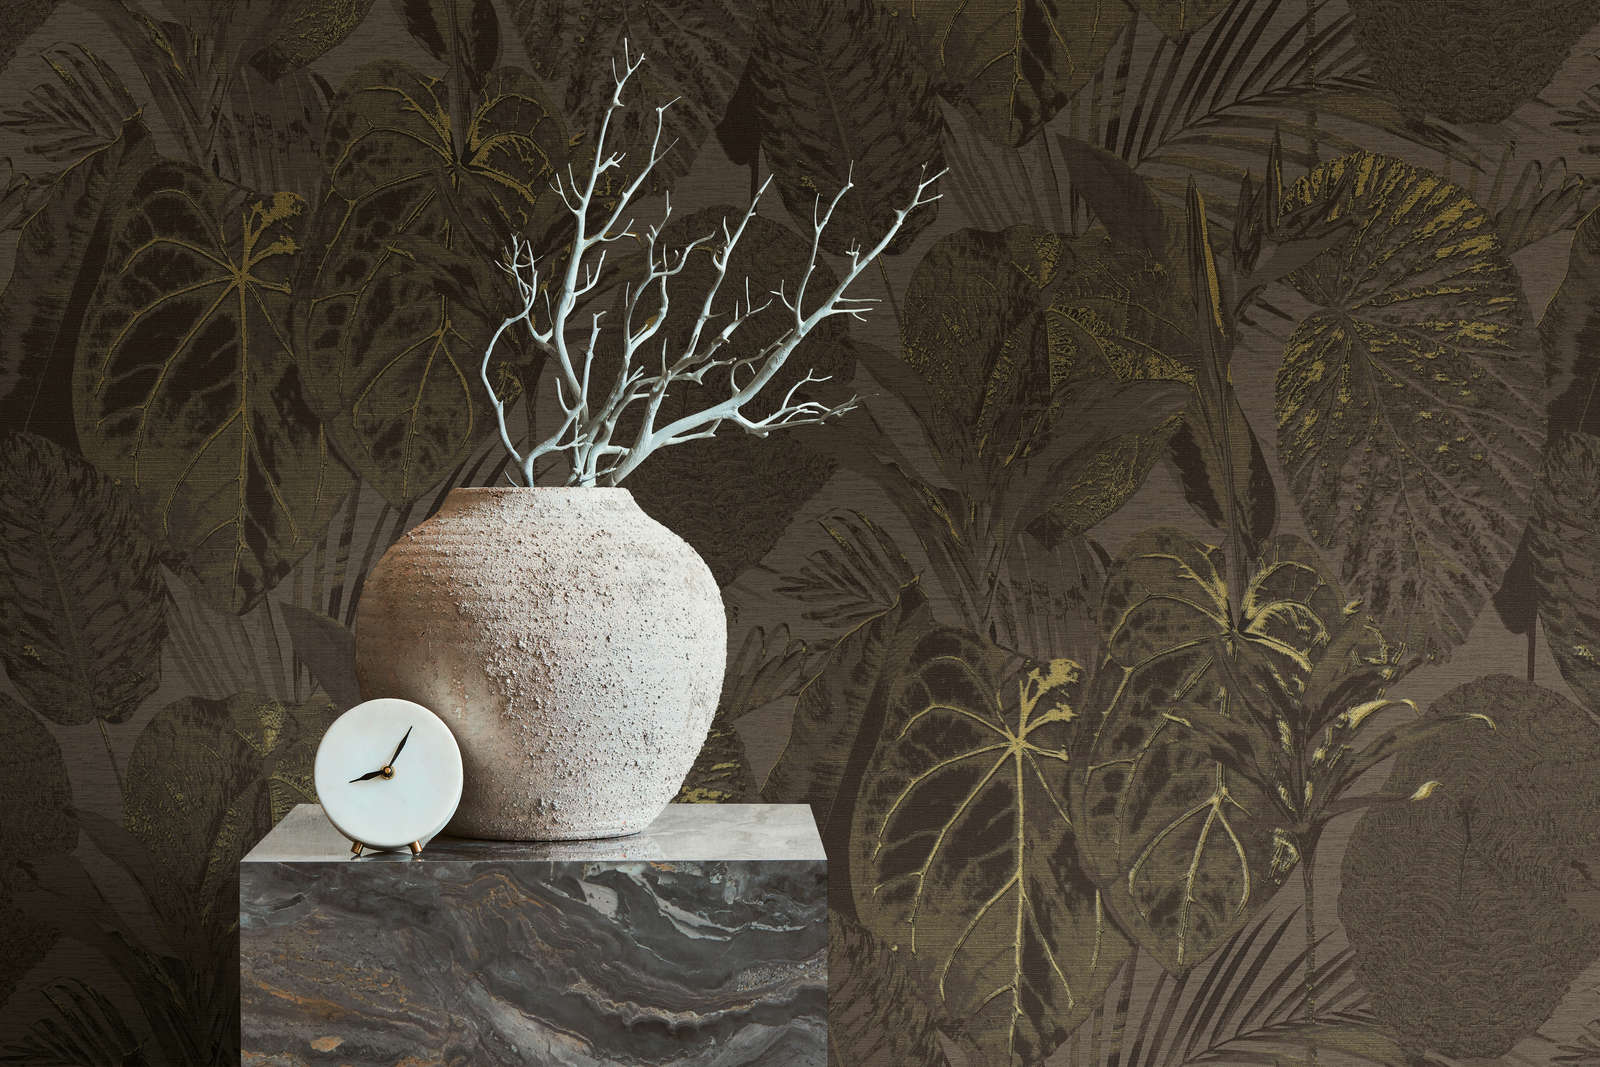             Non-woven wallpaper with jungle pattern lightly textured, matt - brown, black, gold
        